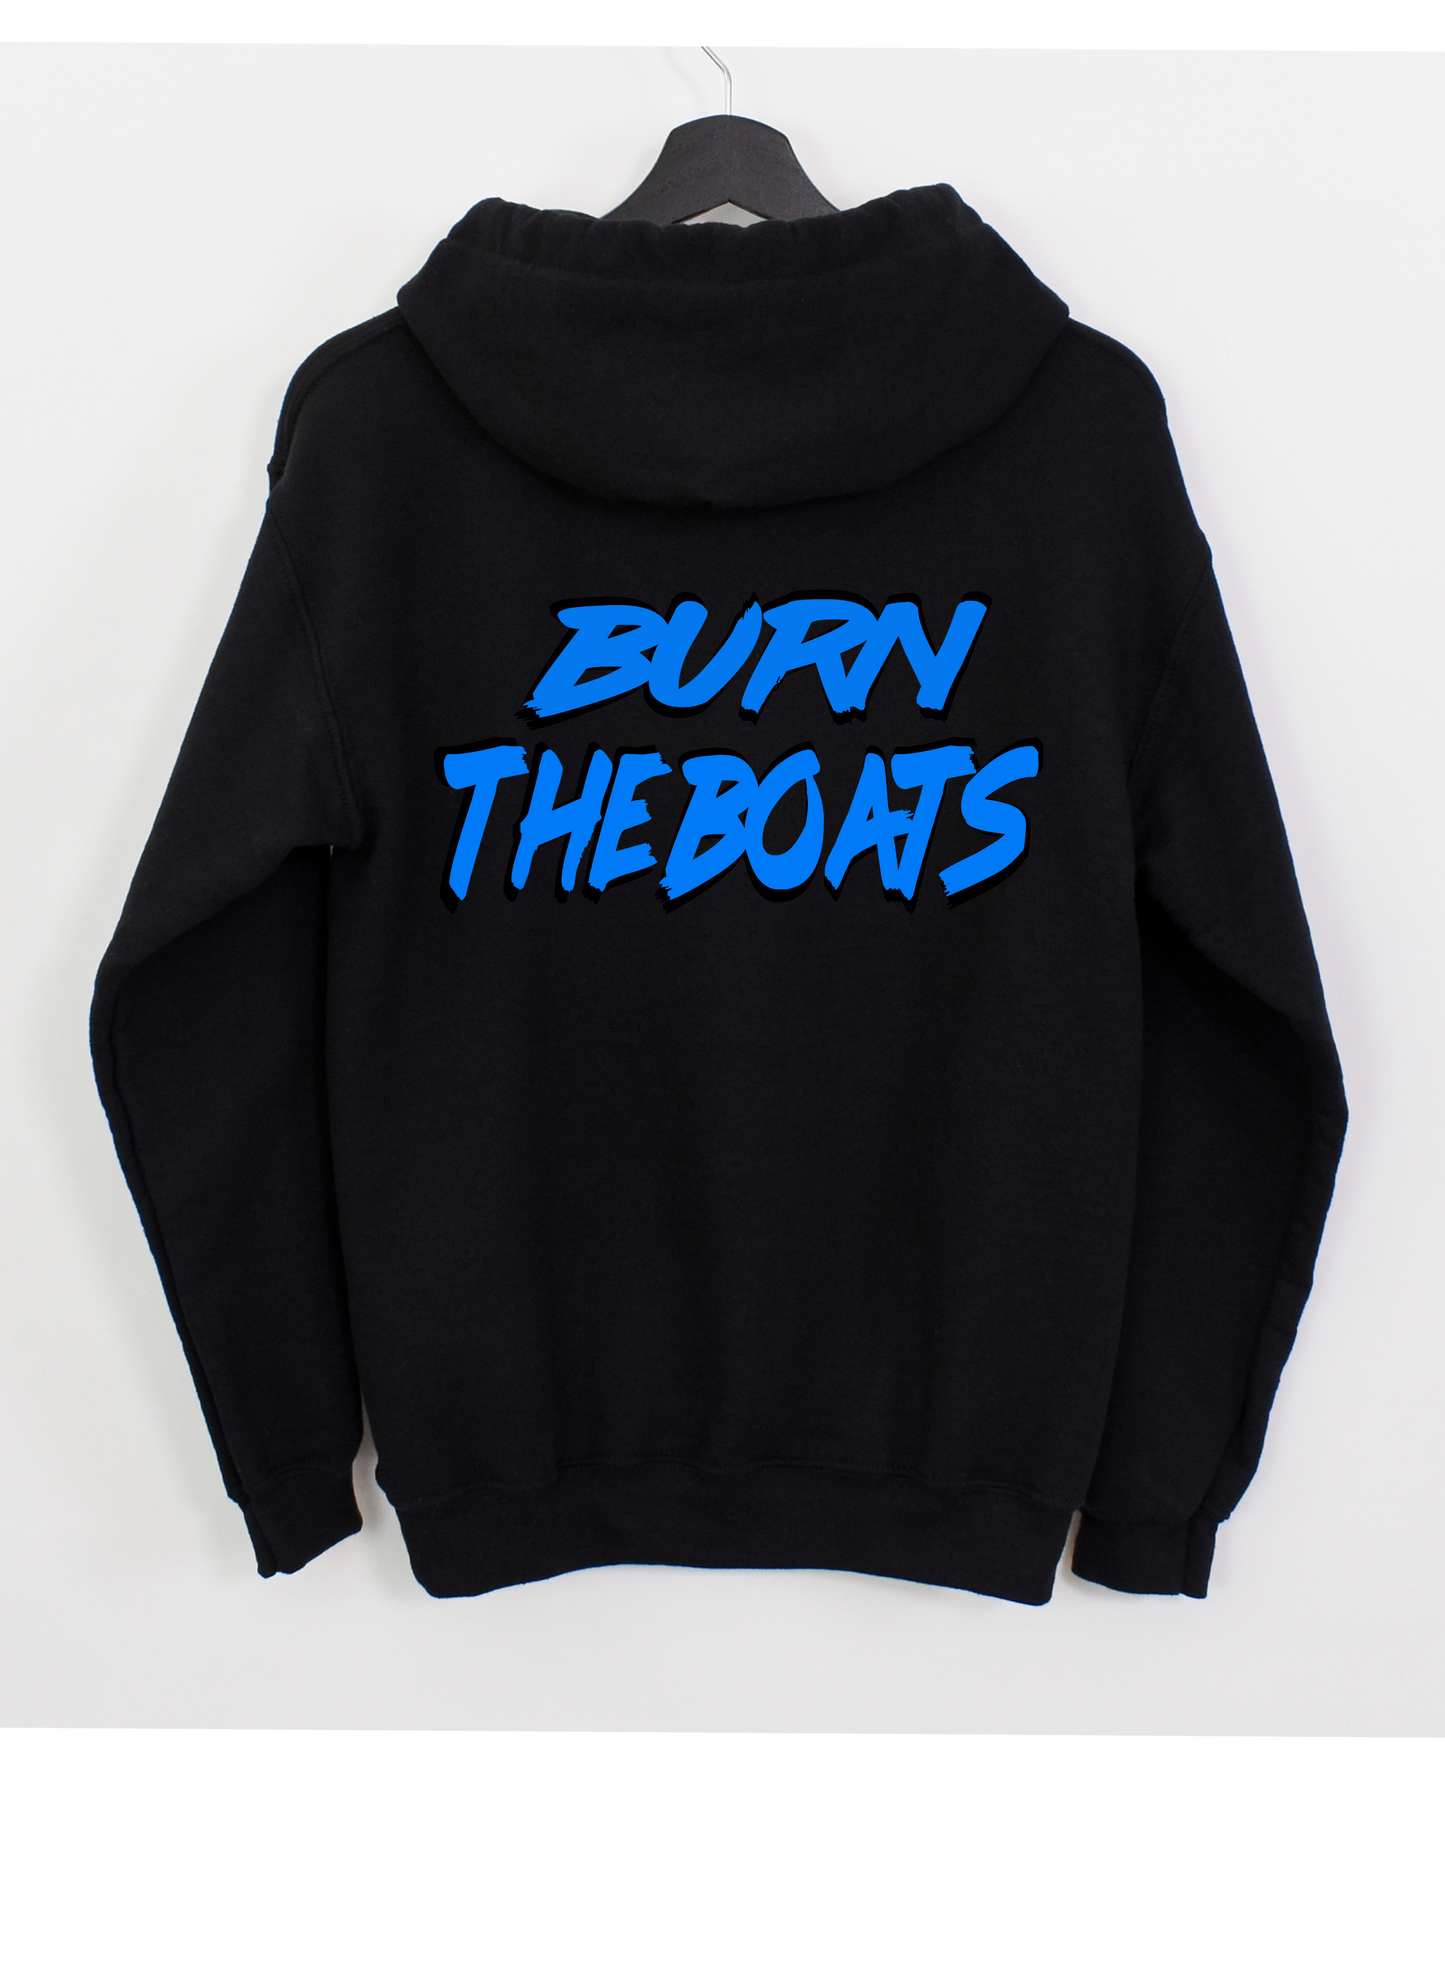 Burn The Boats